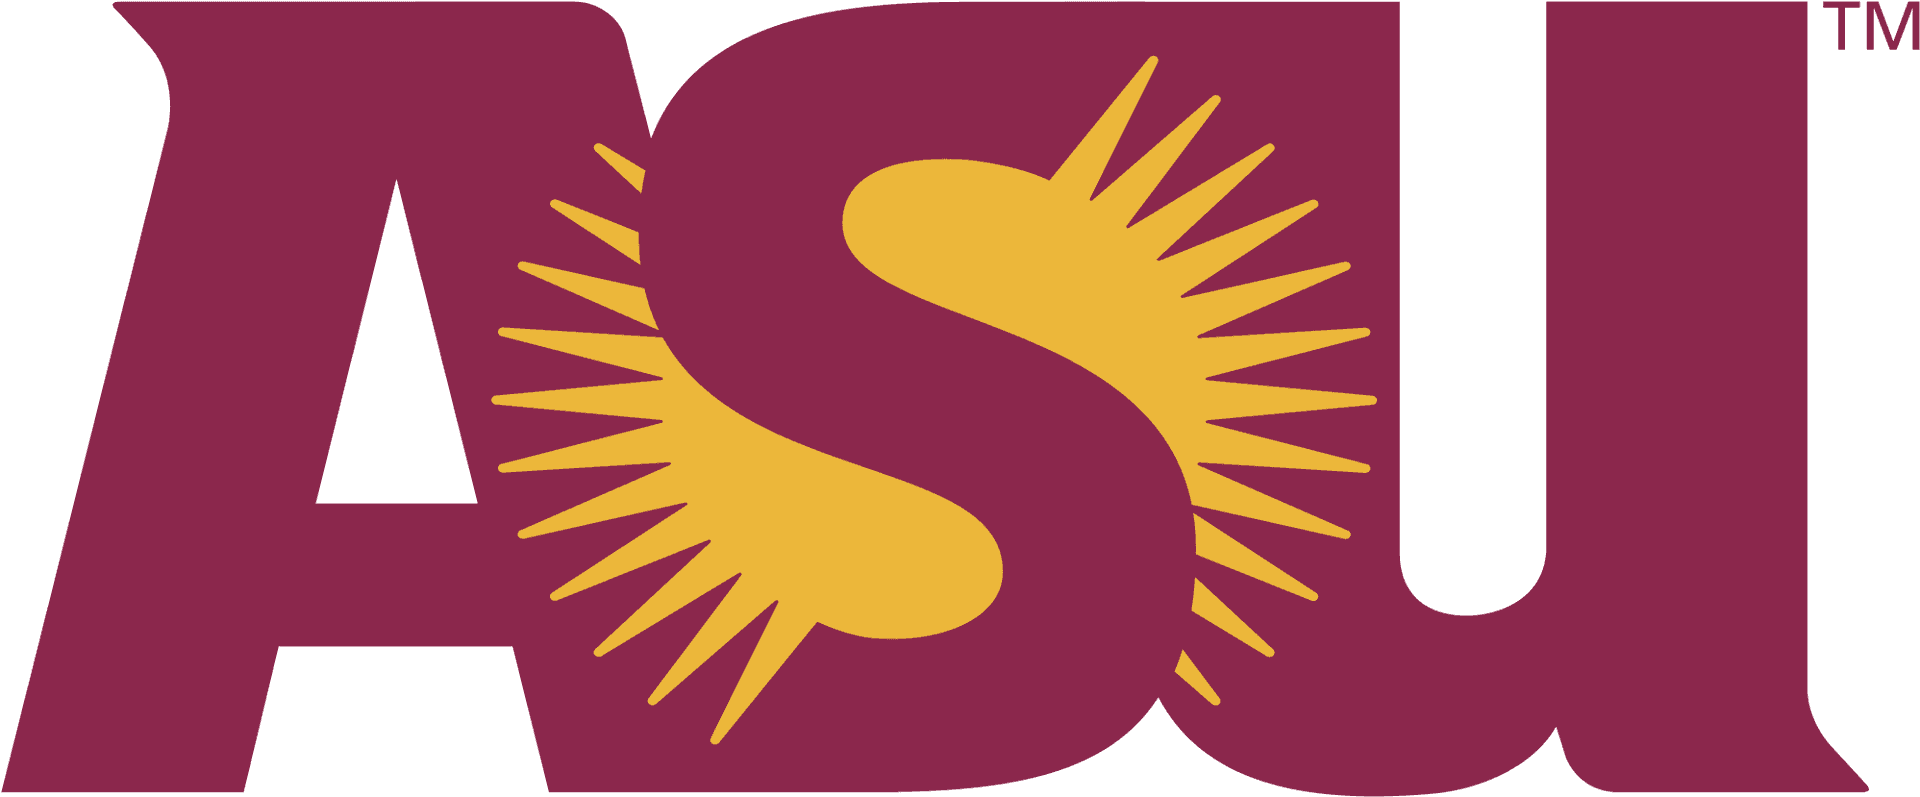 Arizona State University Logo PNG